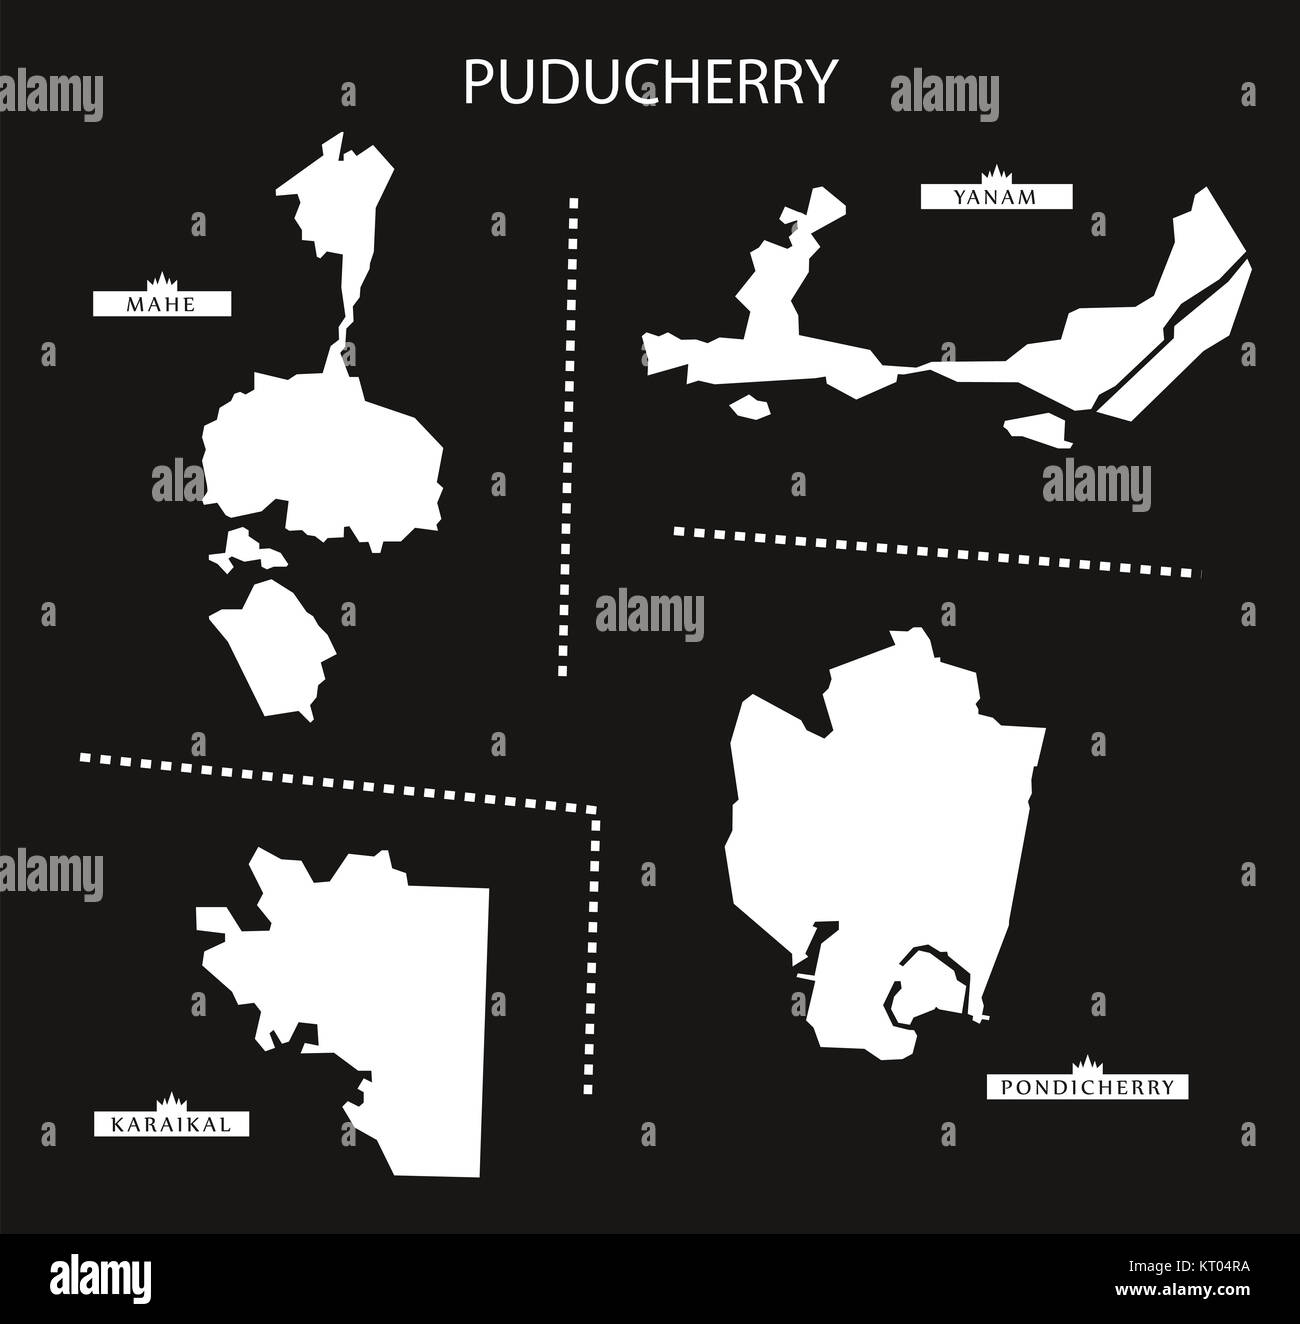 Puducherry India Map black inverted Stock Photo